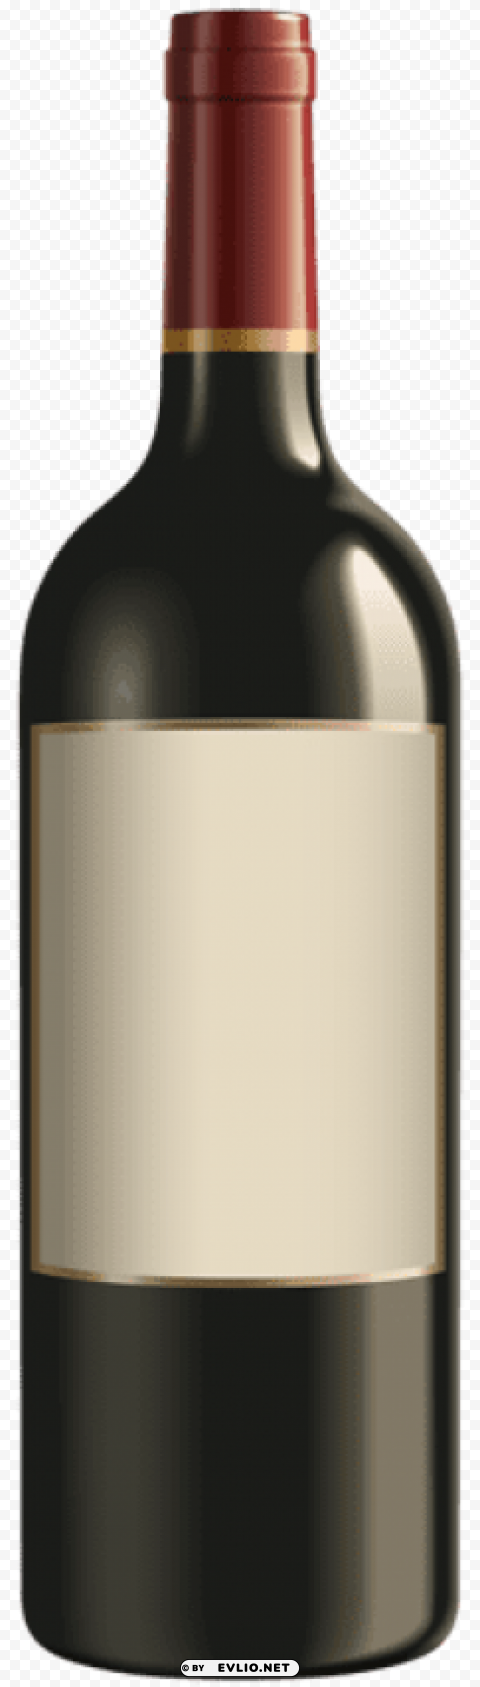 bottle of red wine Transparent PNG image